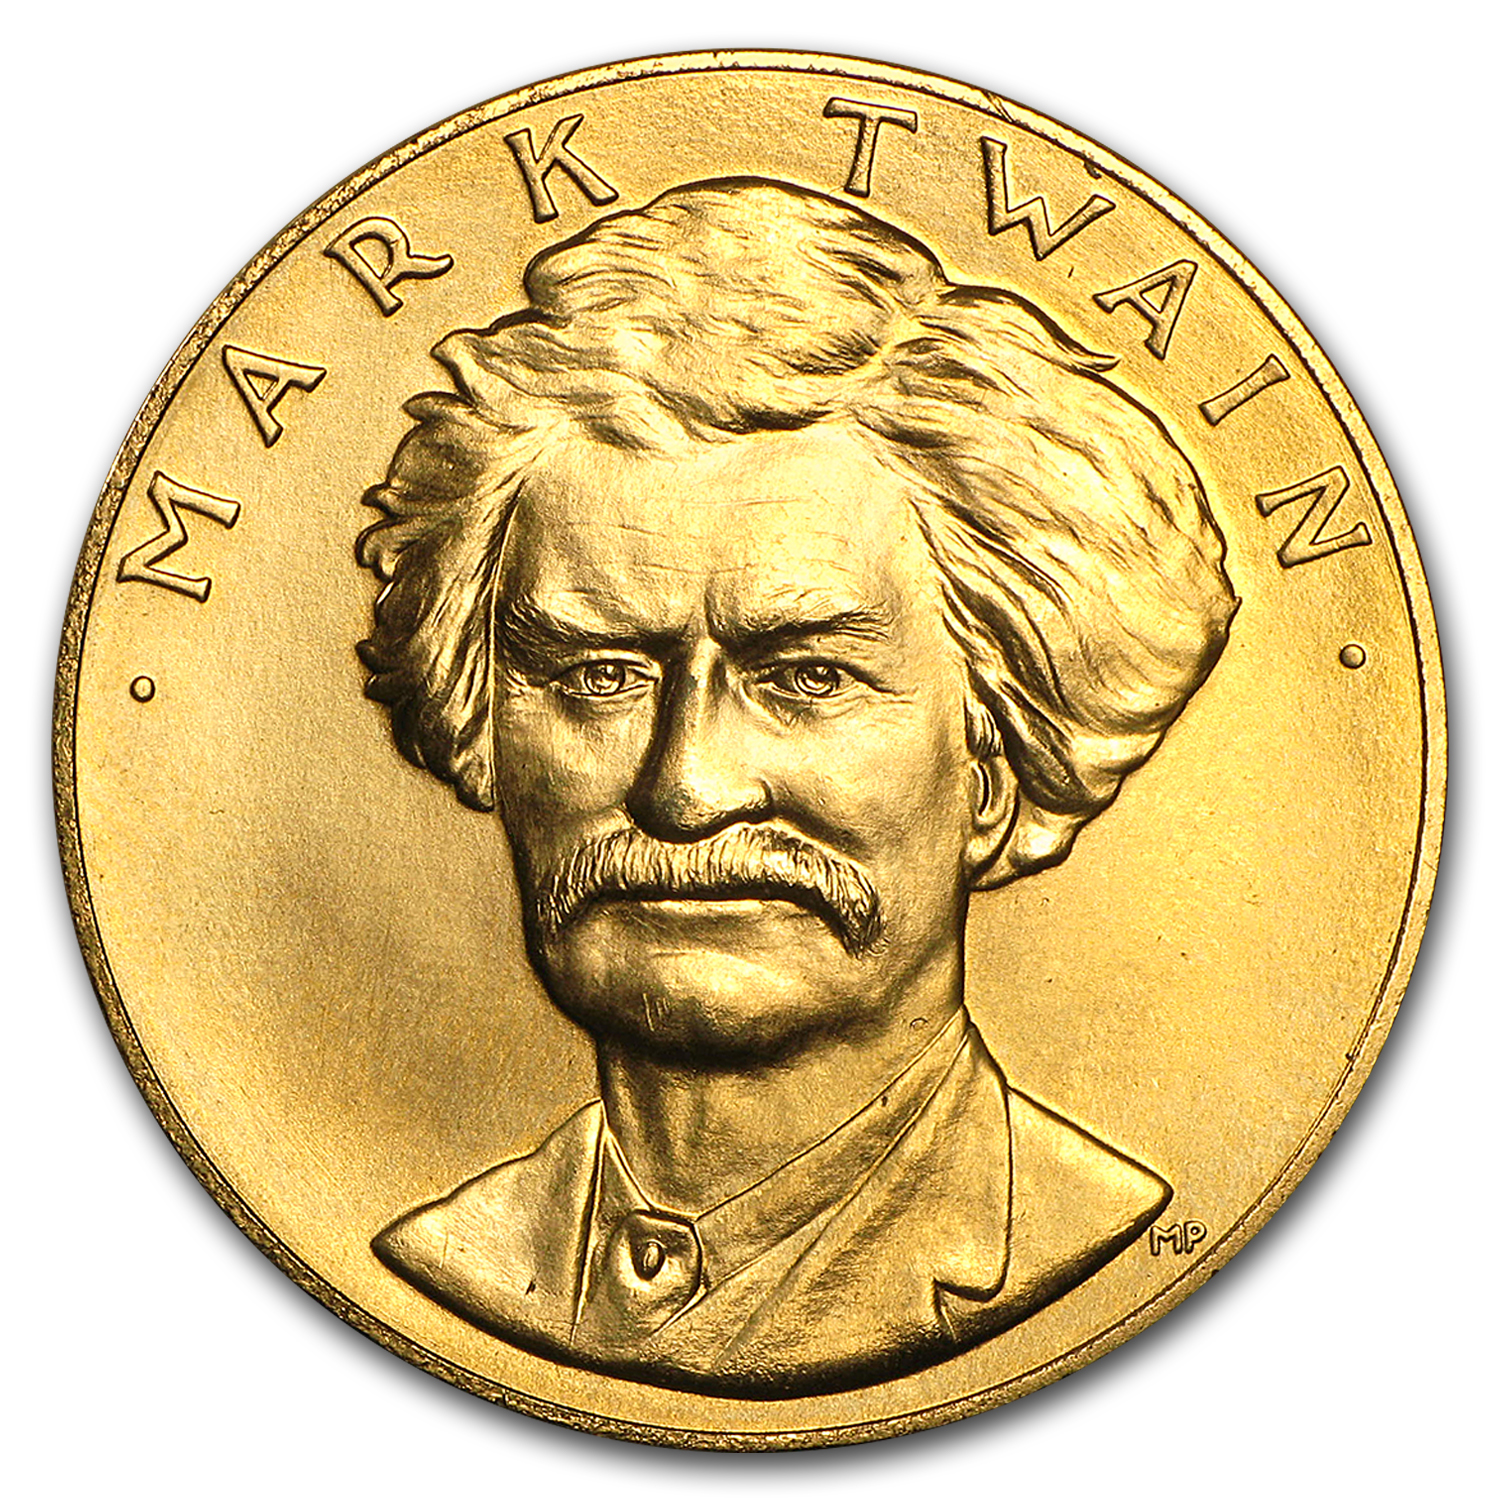 Buy U.S. Mint 1 oz Gold Commemorative Arts Medal Helen Hayes | APMEX